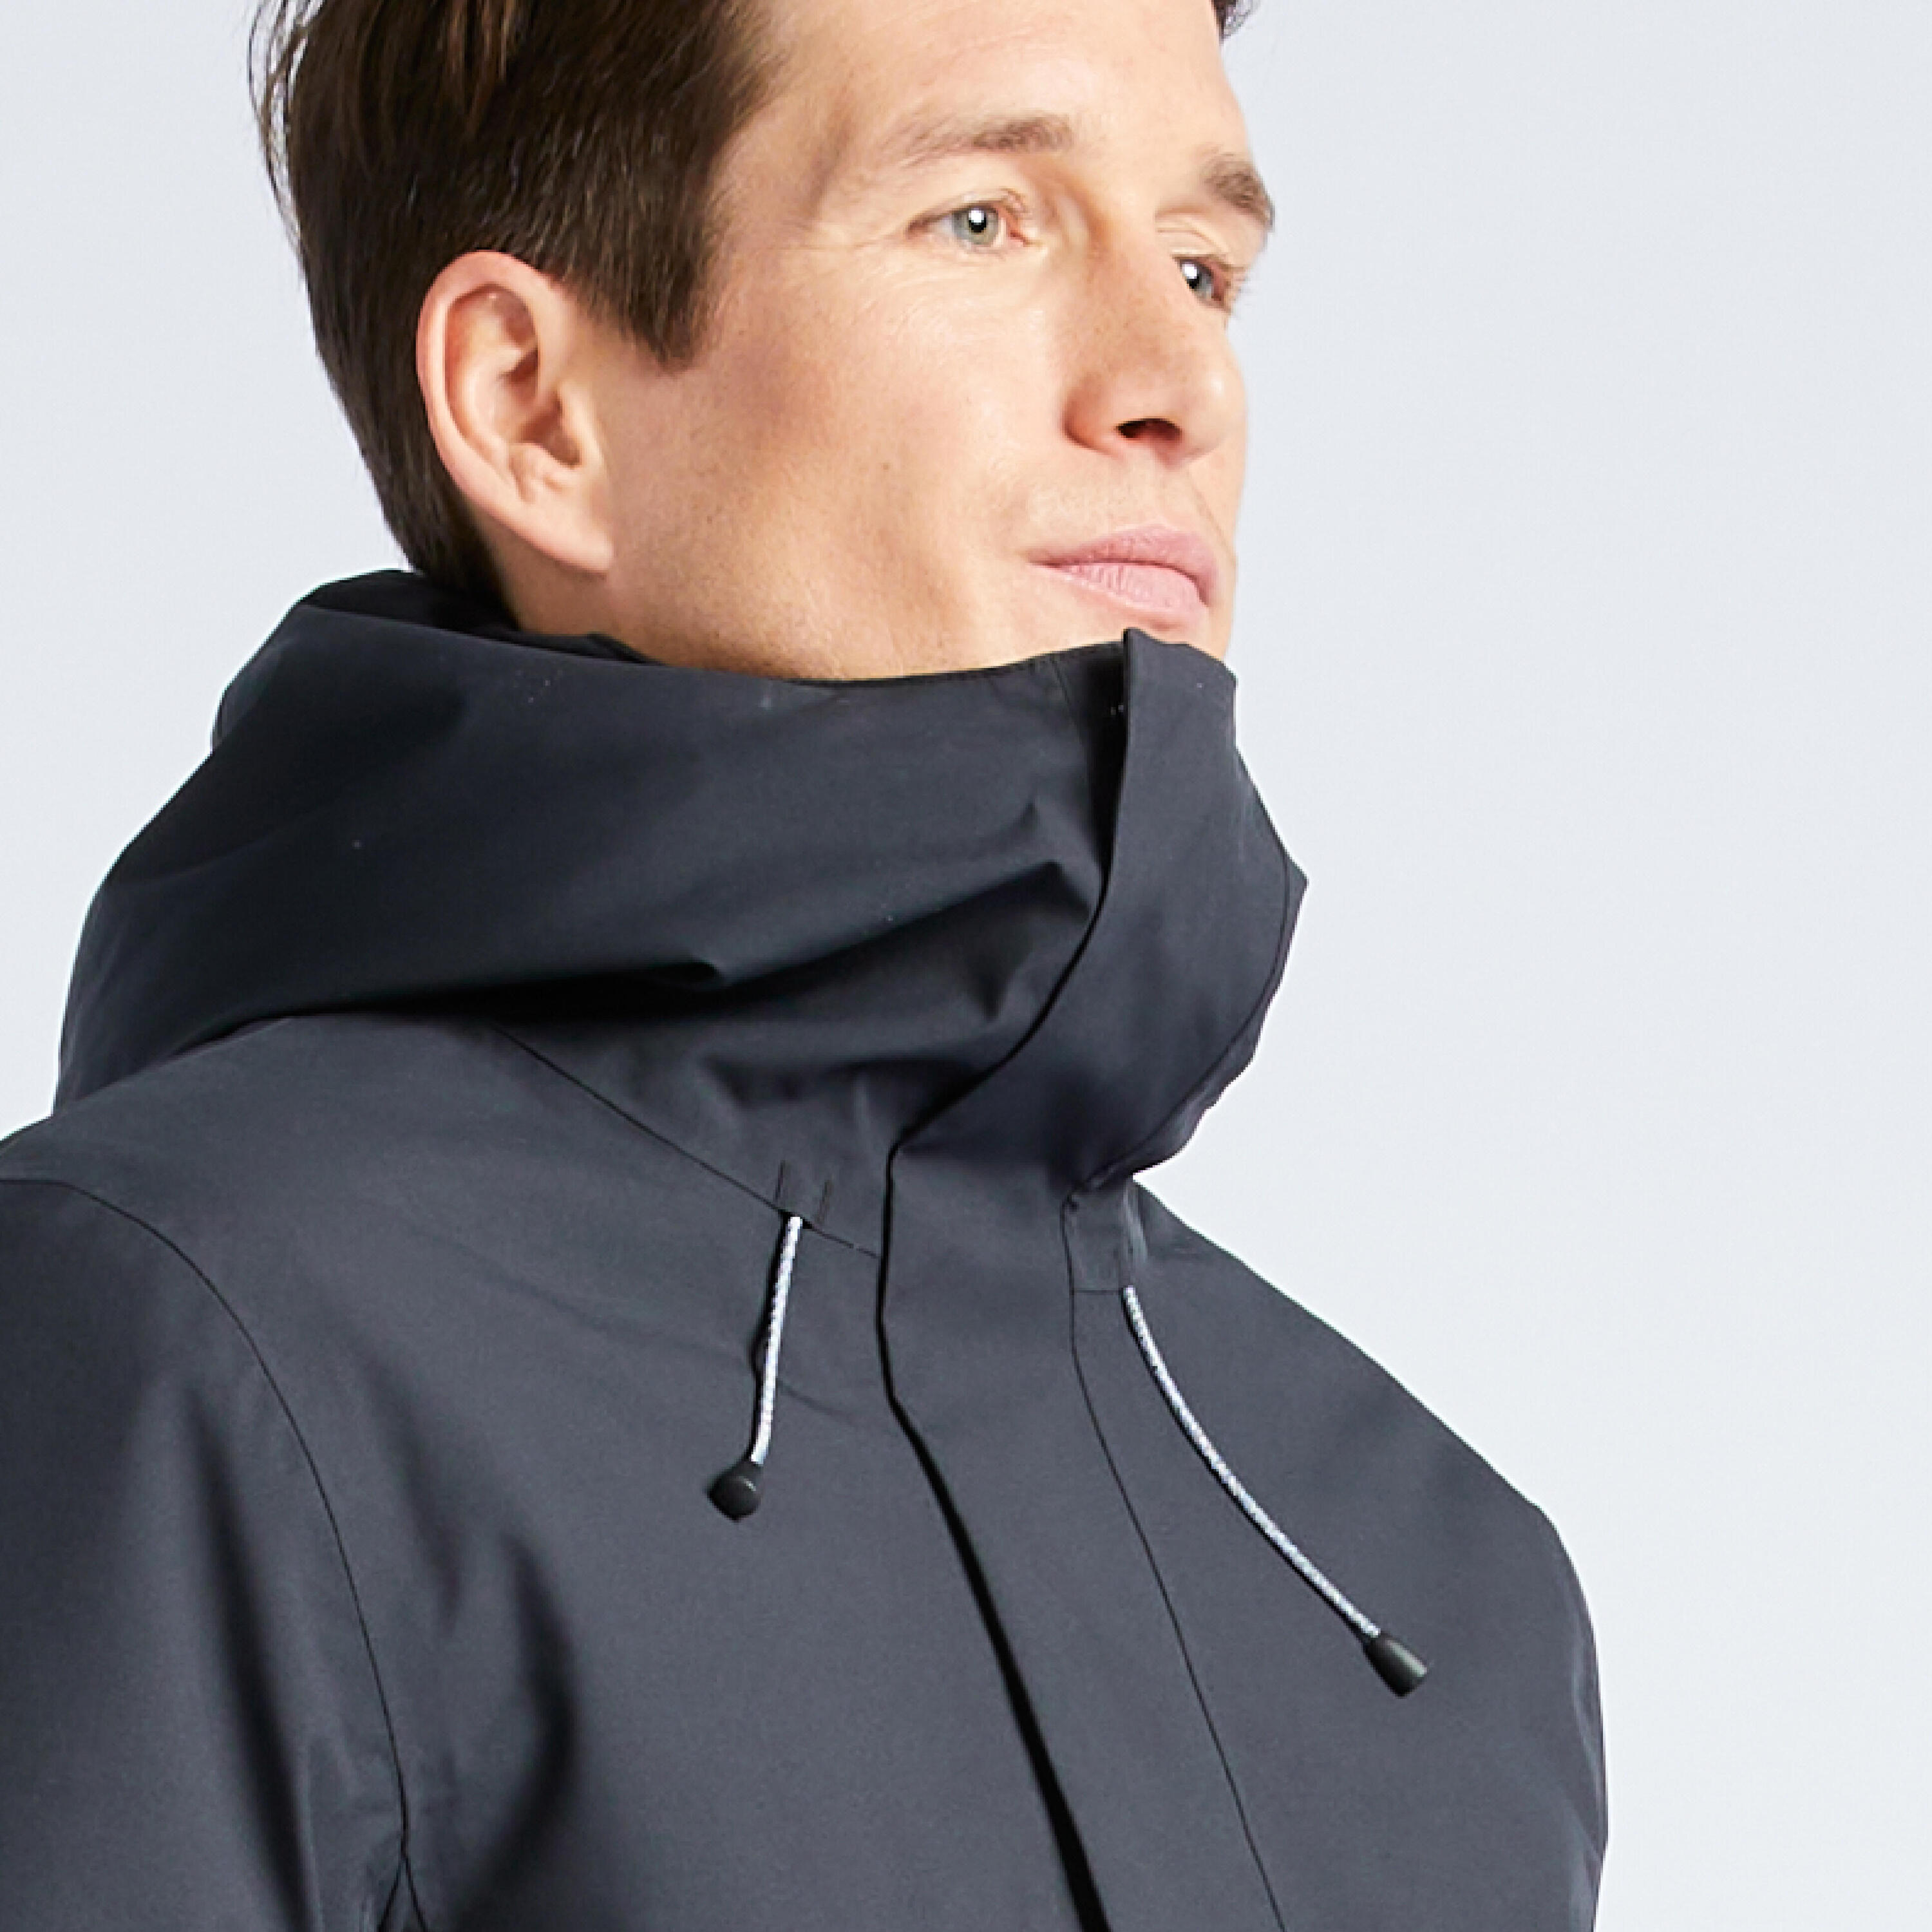 Men's warm waterproof windproof sailing jacket - SAILING 300 Dark grey 4/13